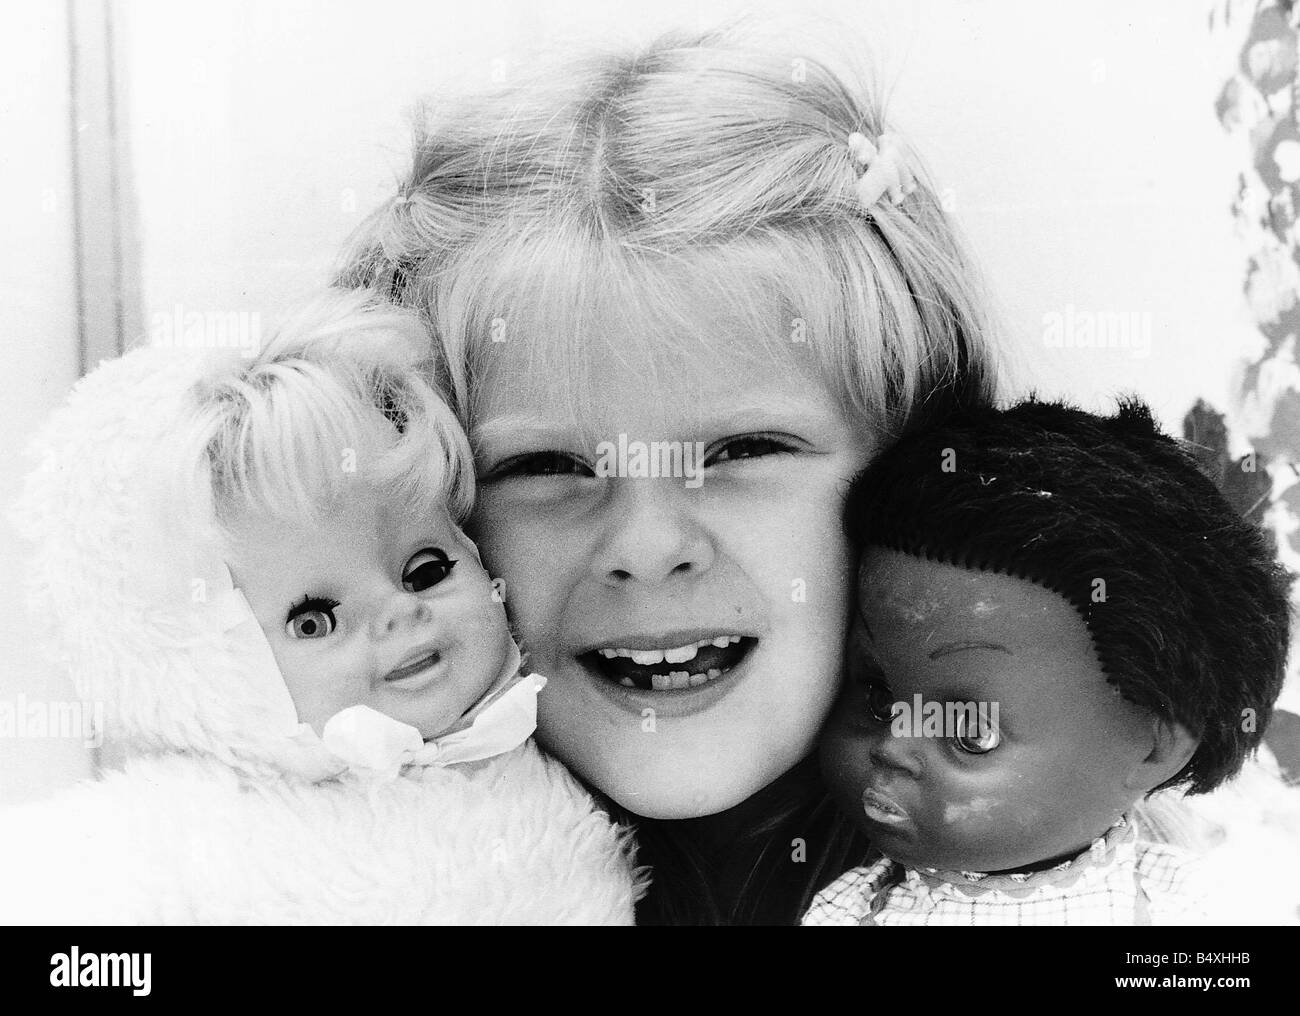 <b>Louise Brown</b> Test Tube Girl holding dolls Dbase MSI - louise-brown-test-tube-girl-holding-dolls-dbase-msi-B4XHHB